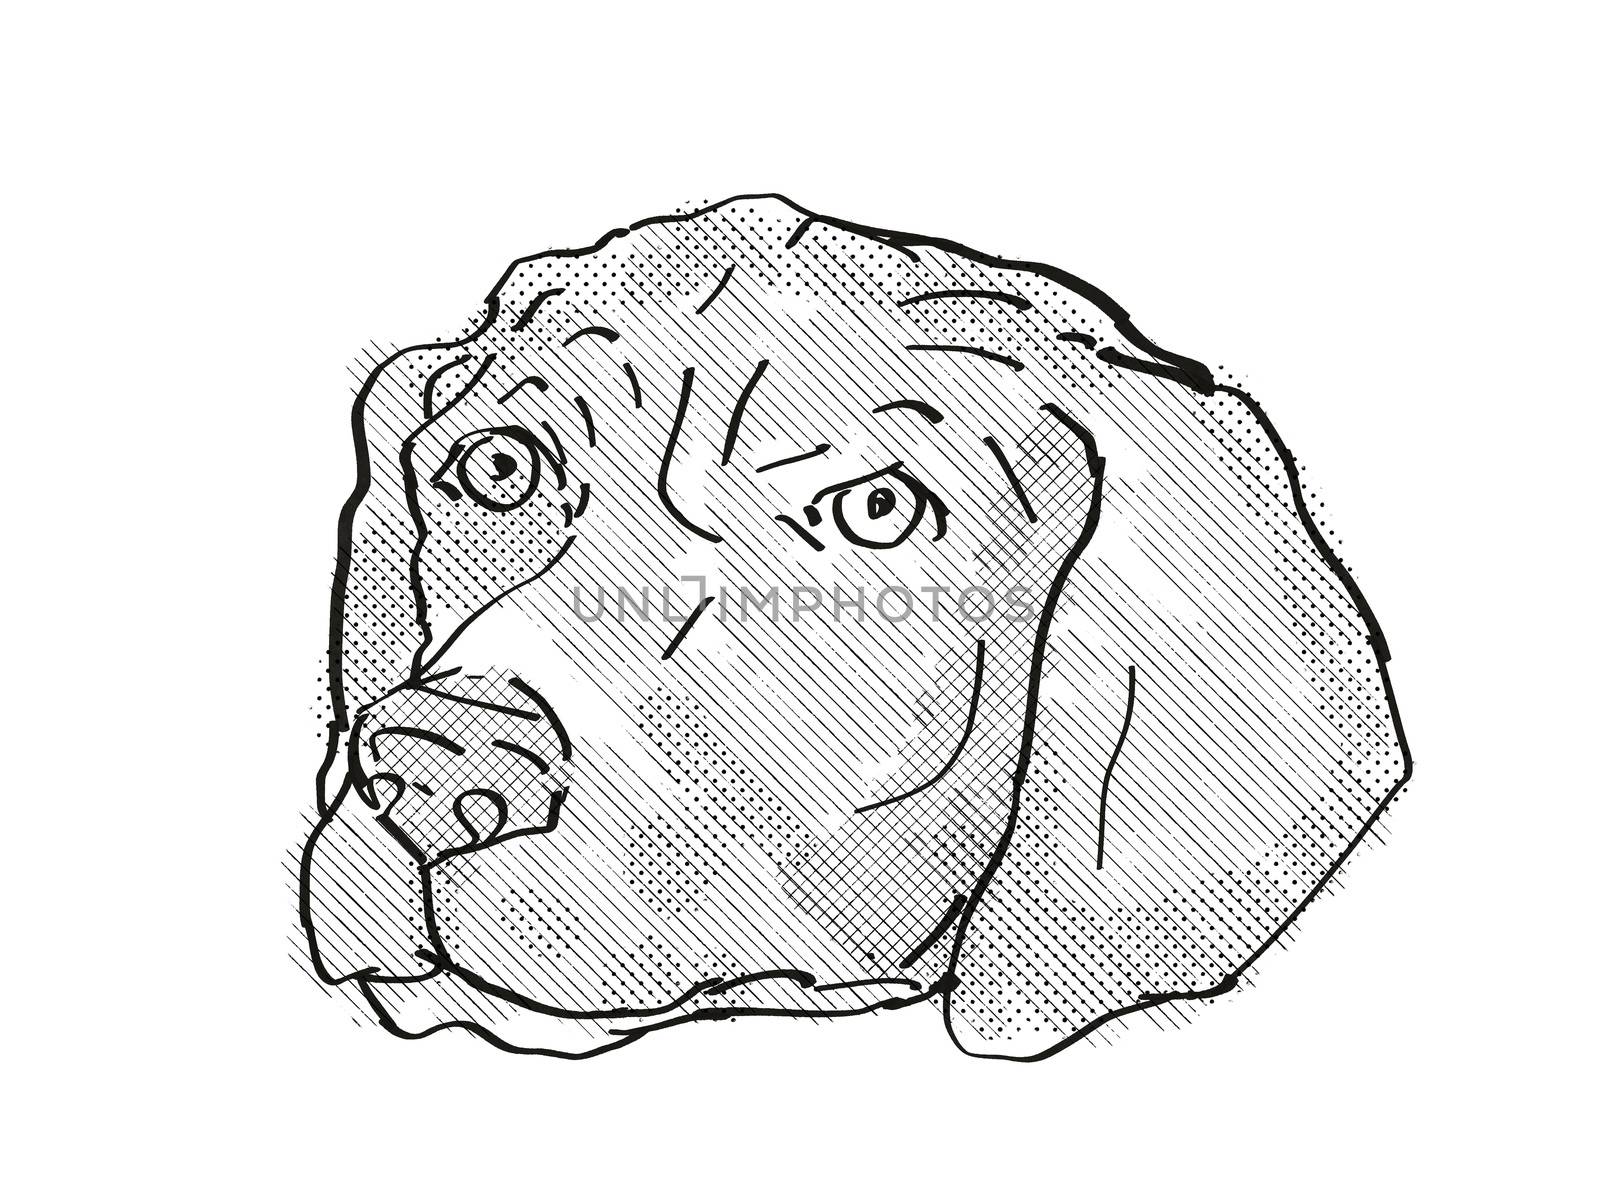 German Shorthaired Pointer Dog Breed Cartoon Retro Drawing by patrimonio